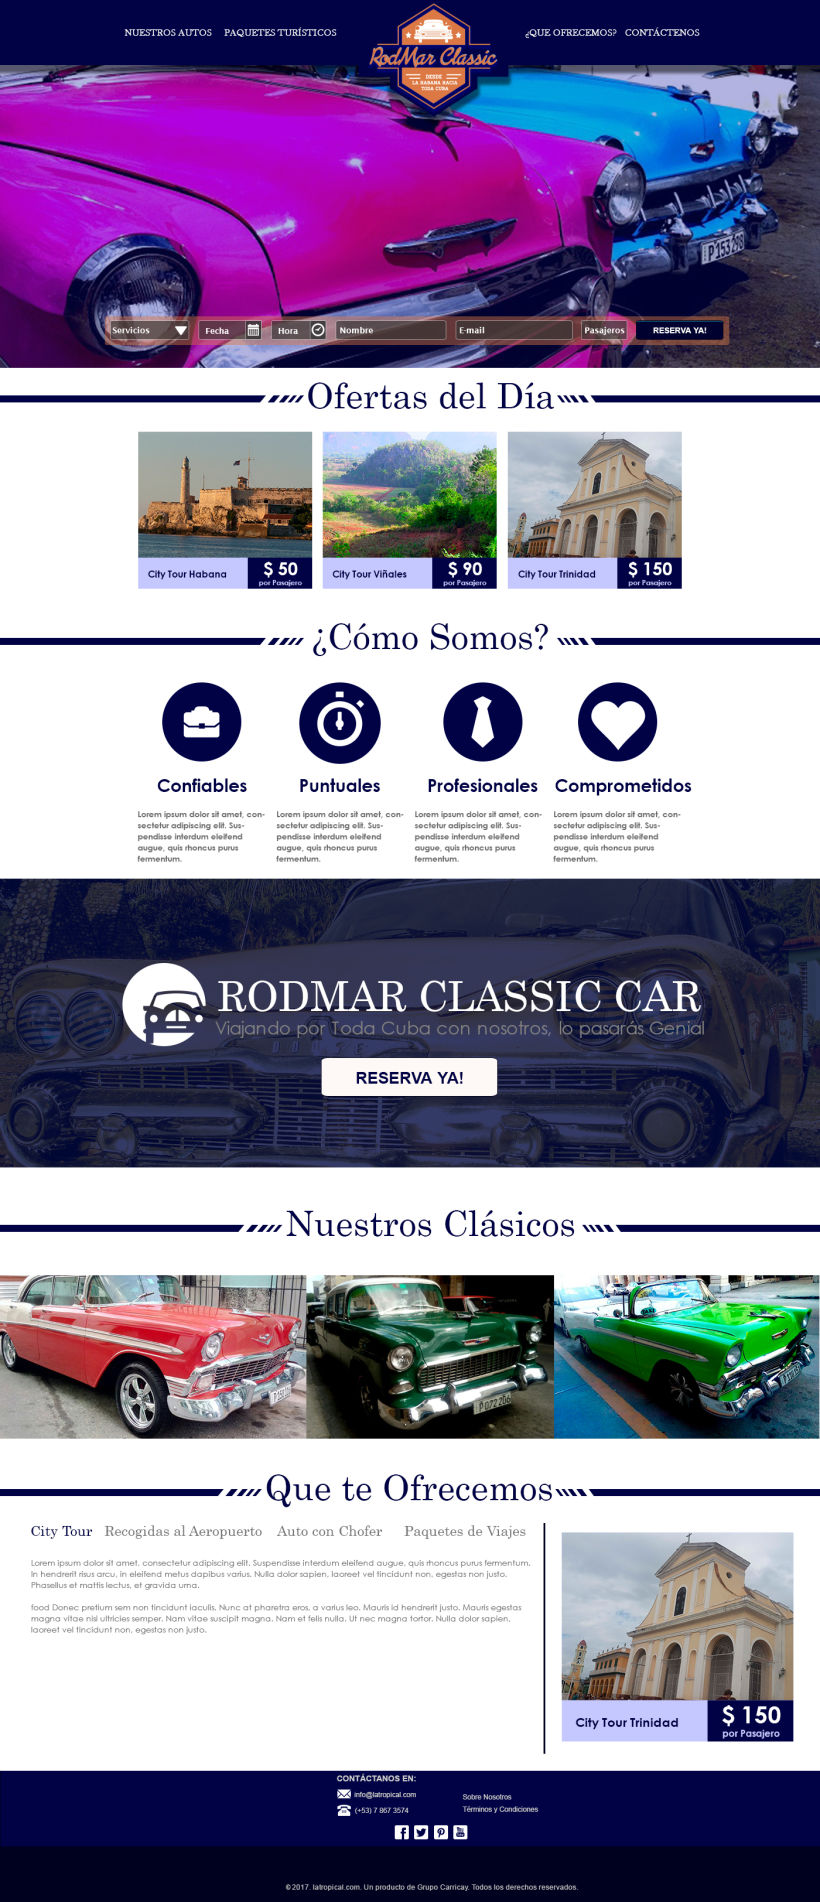 Rodmar Classic Cars -1